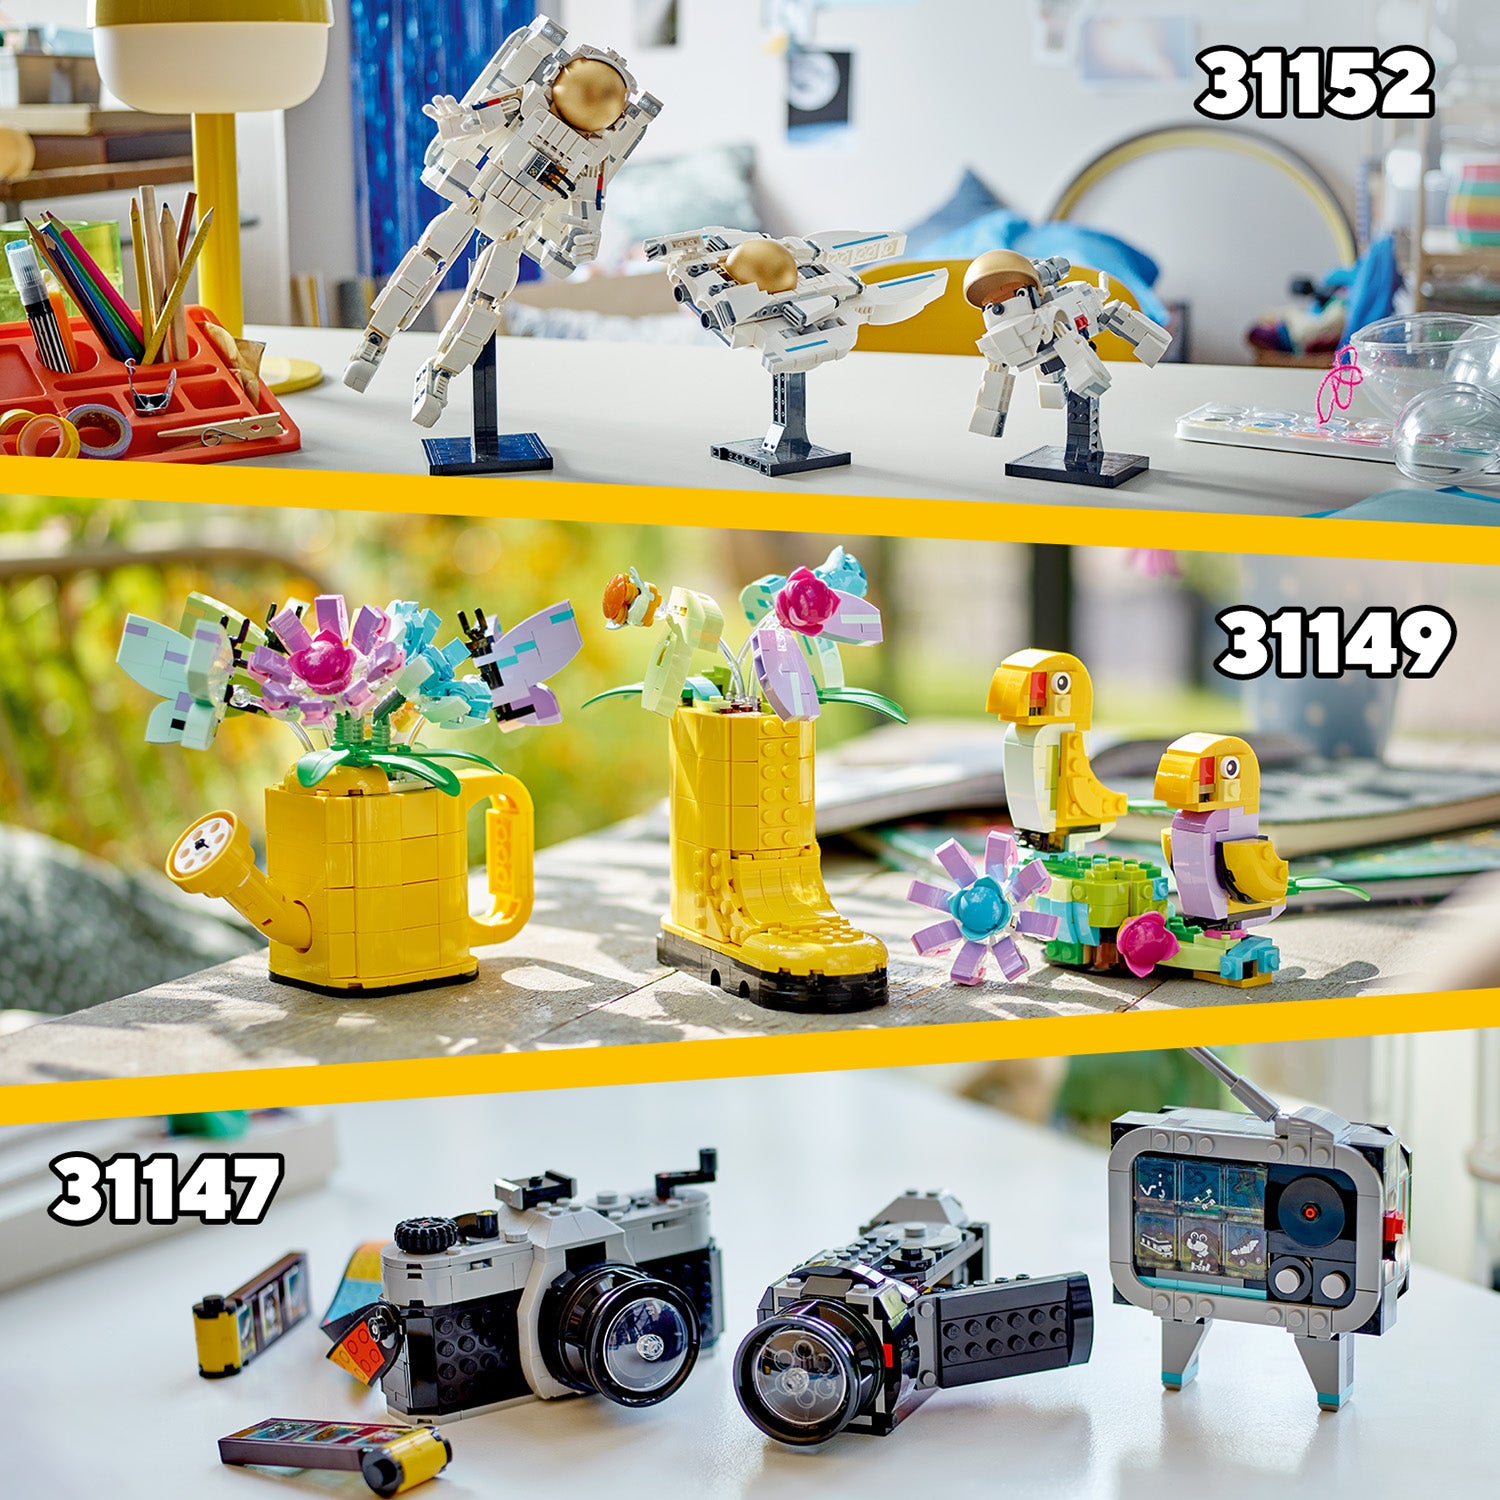 Lego 31148 Retro Roller Skate